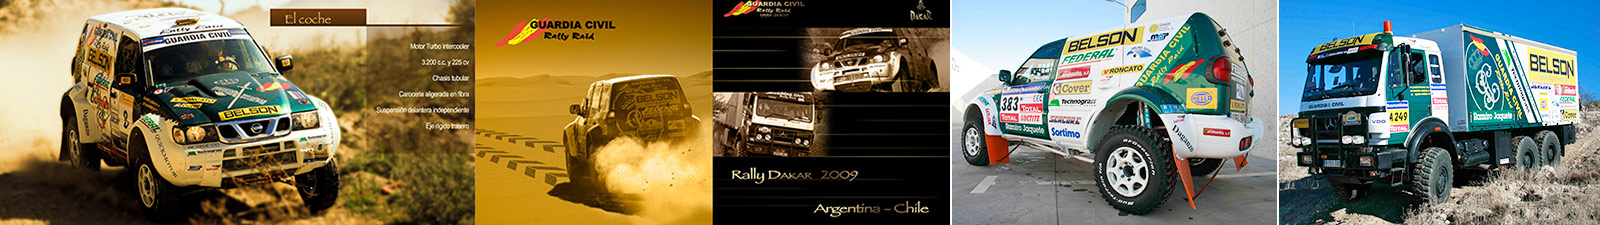 Dakar 2009. Una victoria.